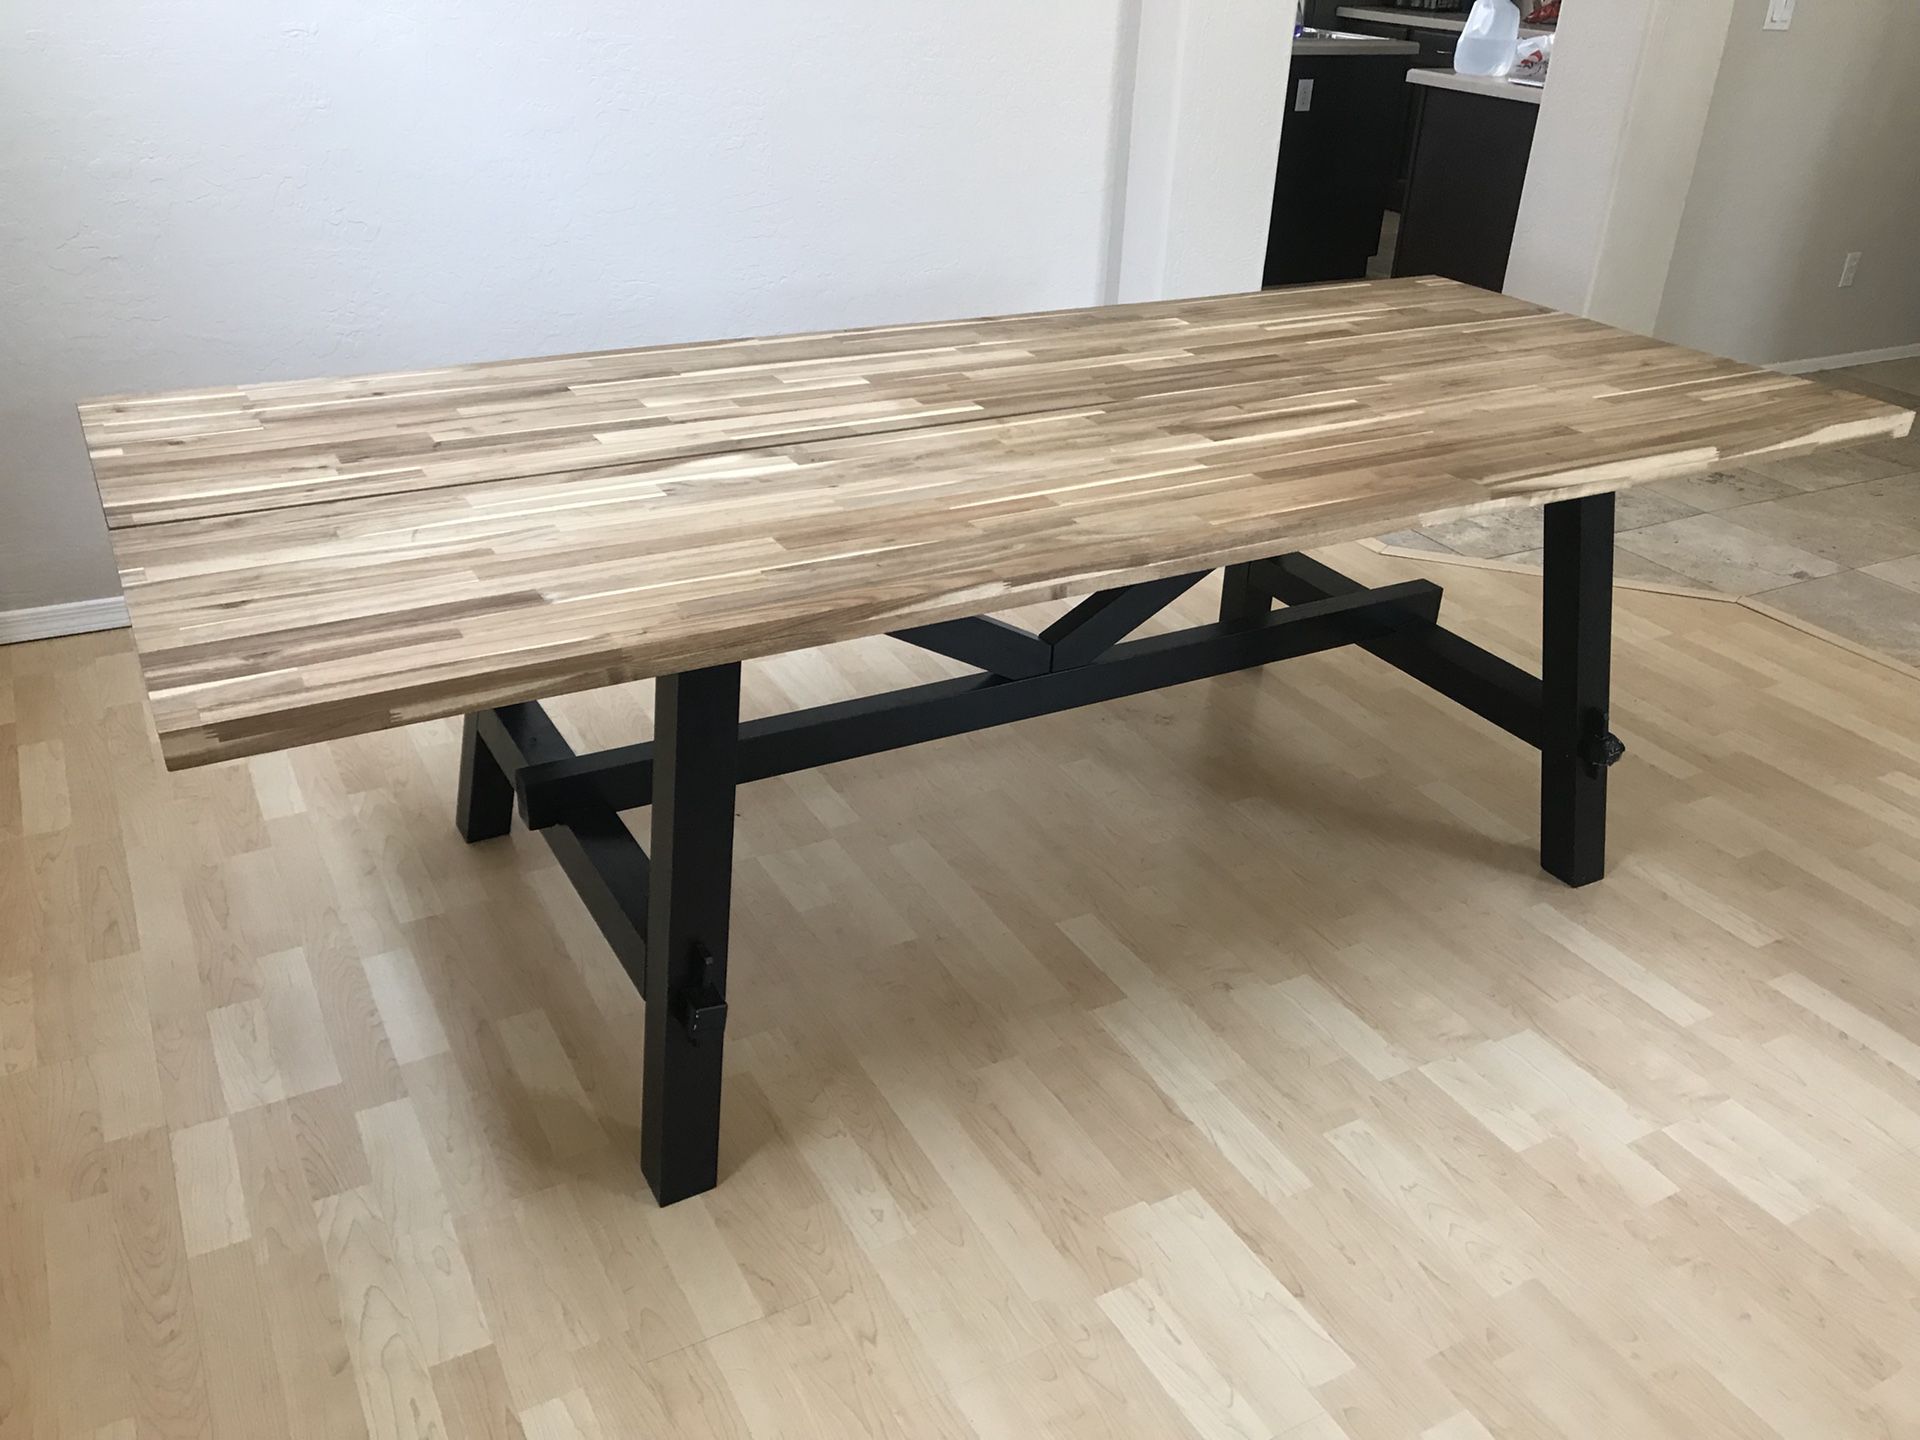 IKEA skogsta dining table. Originally 450 selling for $200.00.